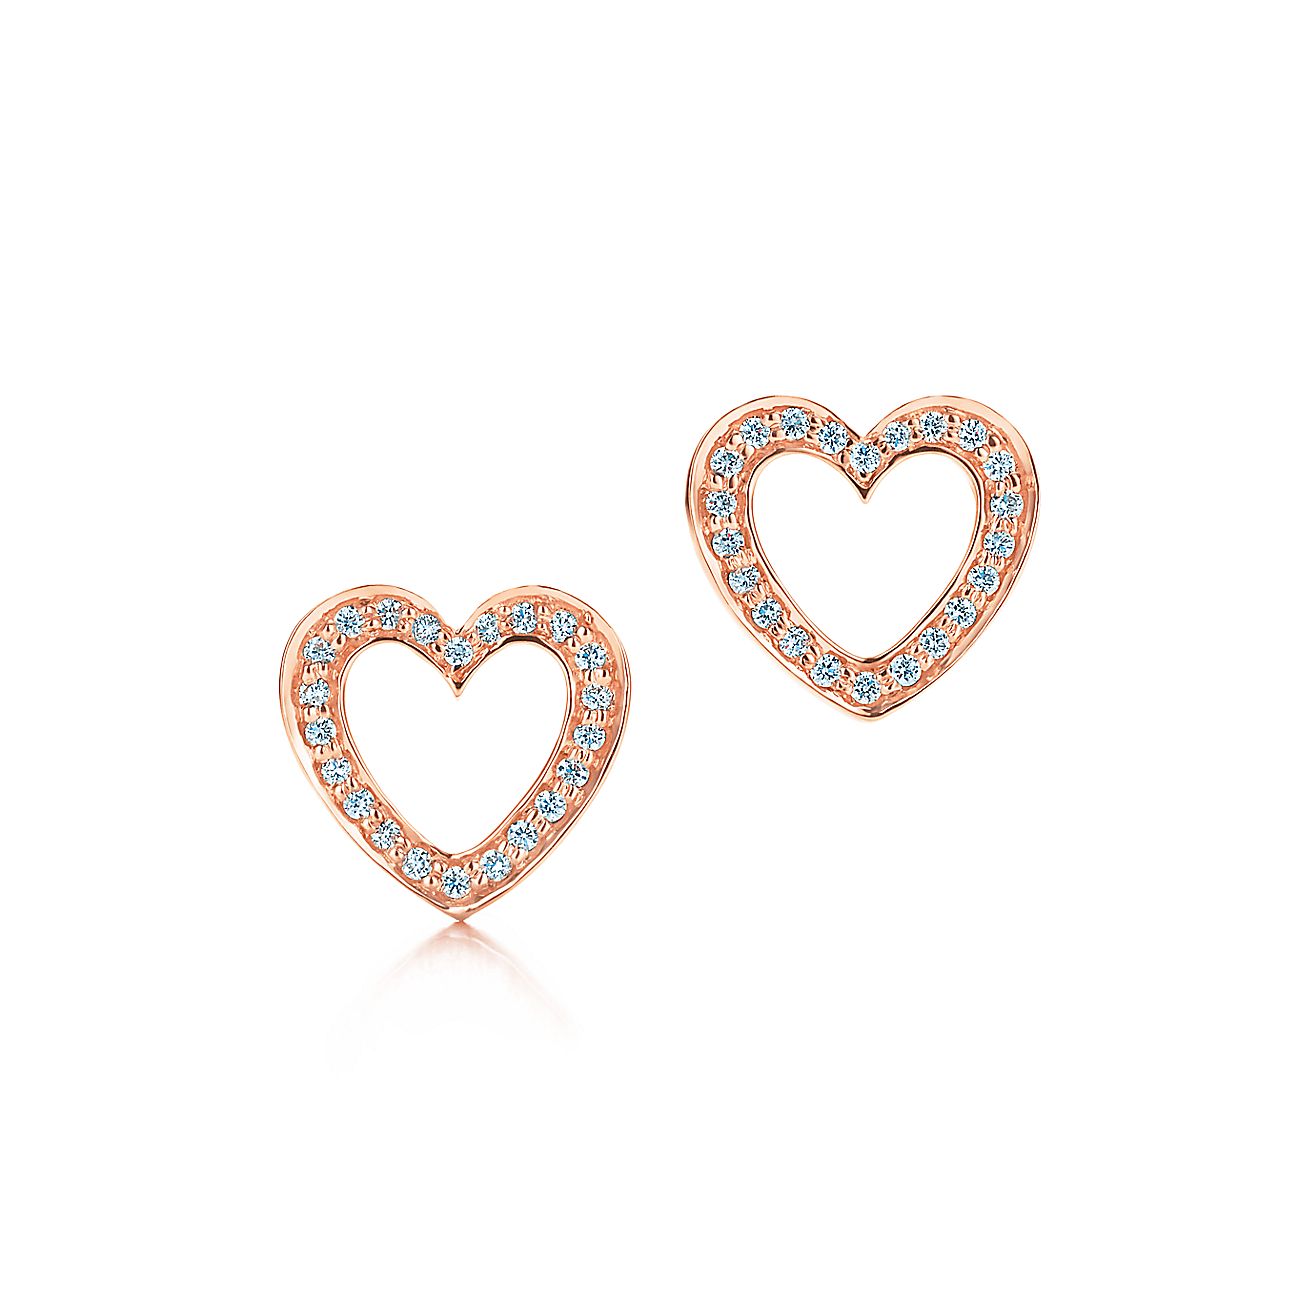 Tiffany Hearts™ earrings with diamonds in 18k rose gold. | Tiffany & Co.